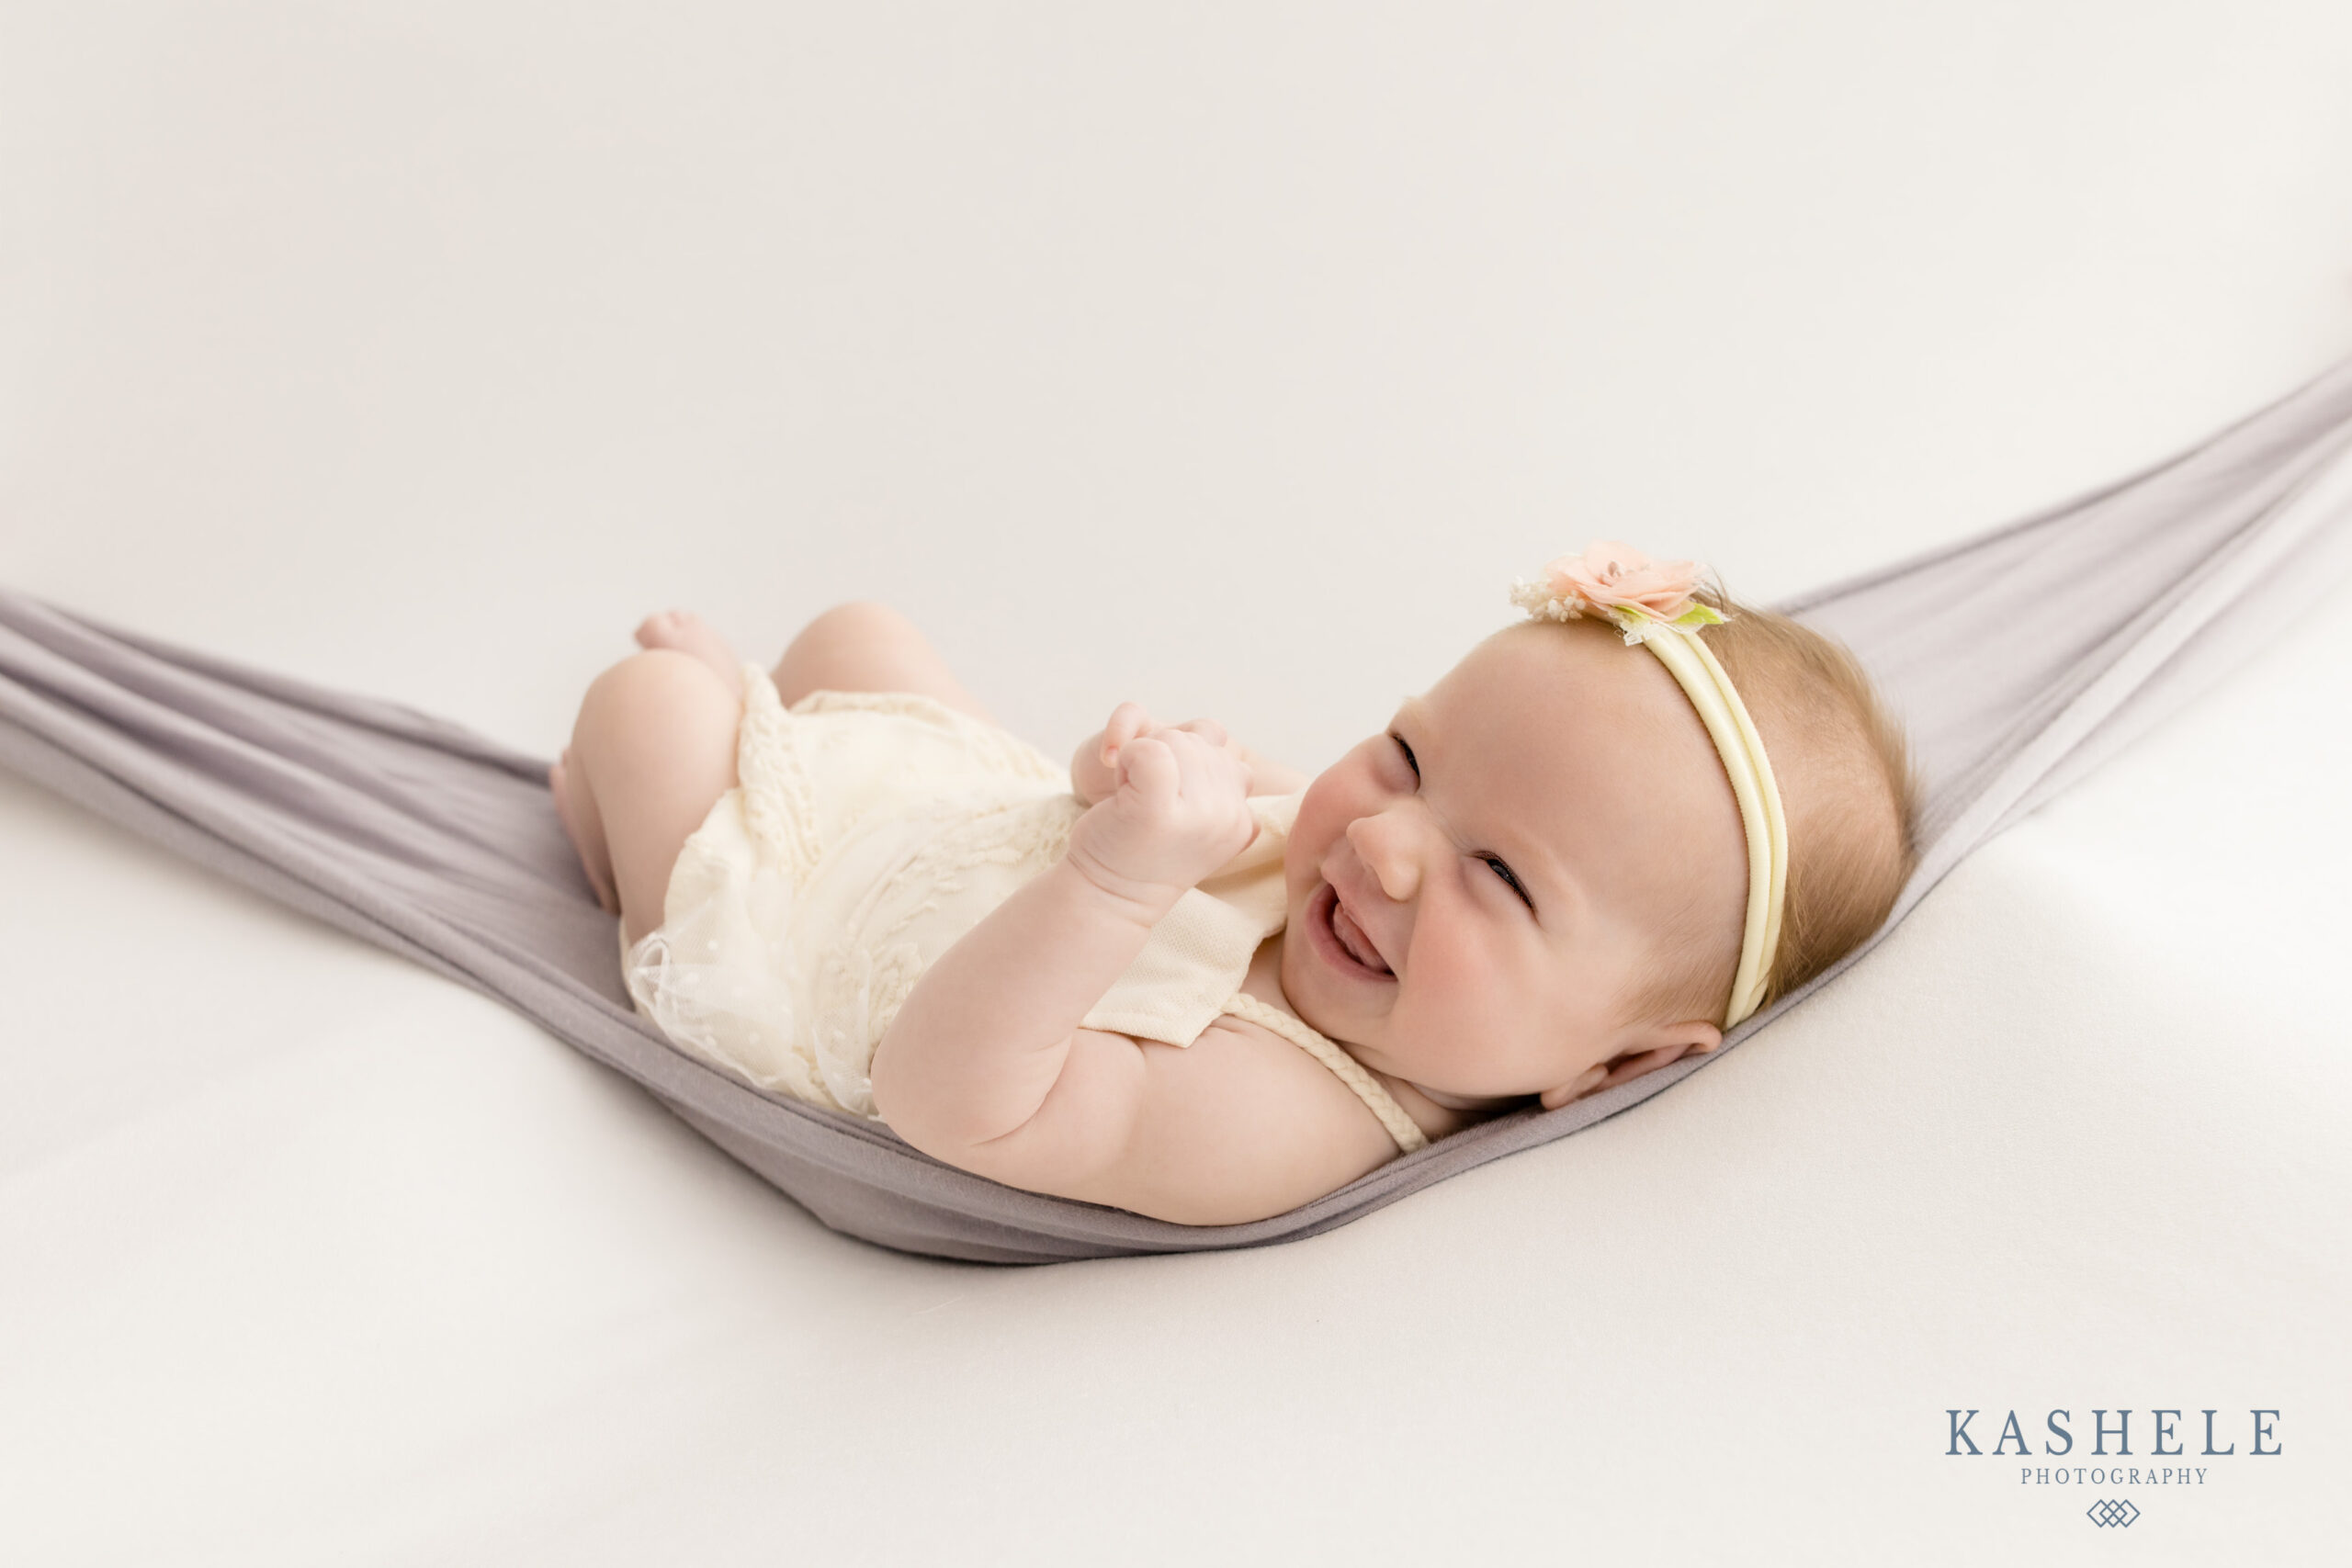 Explore Newborn Photography: Posed, Lifestyle or Documentary? - Johanna  King Photography